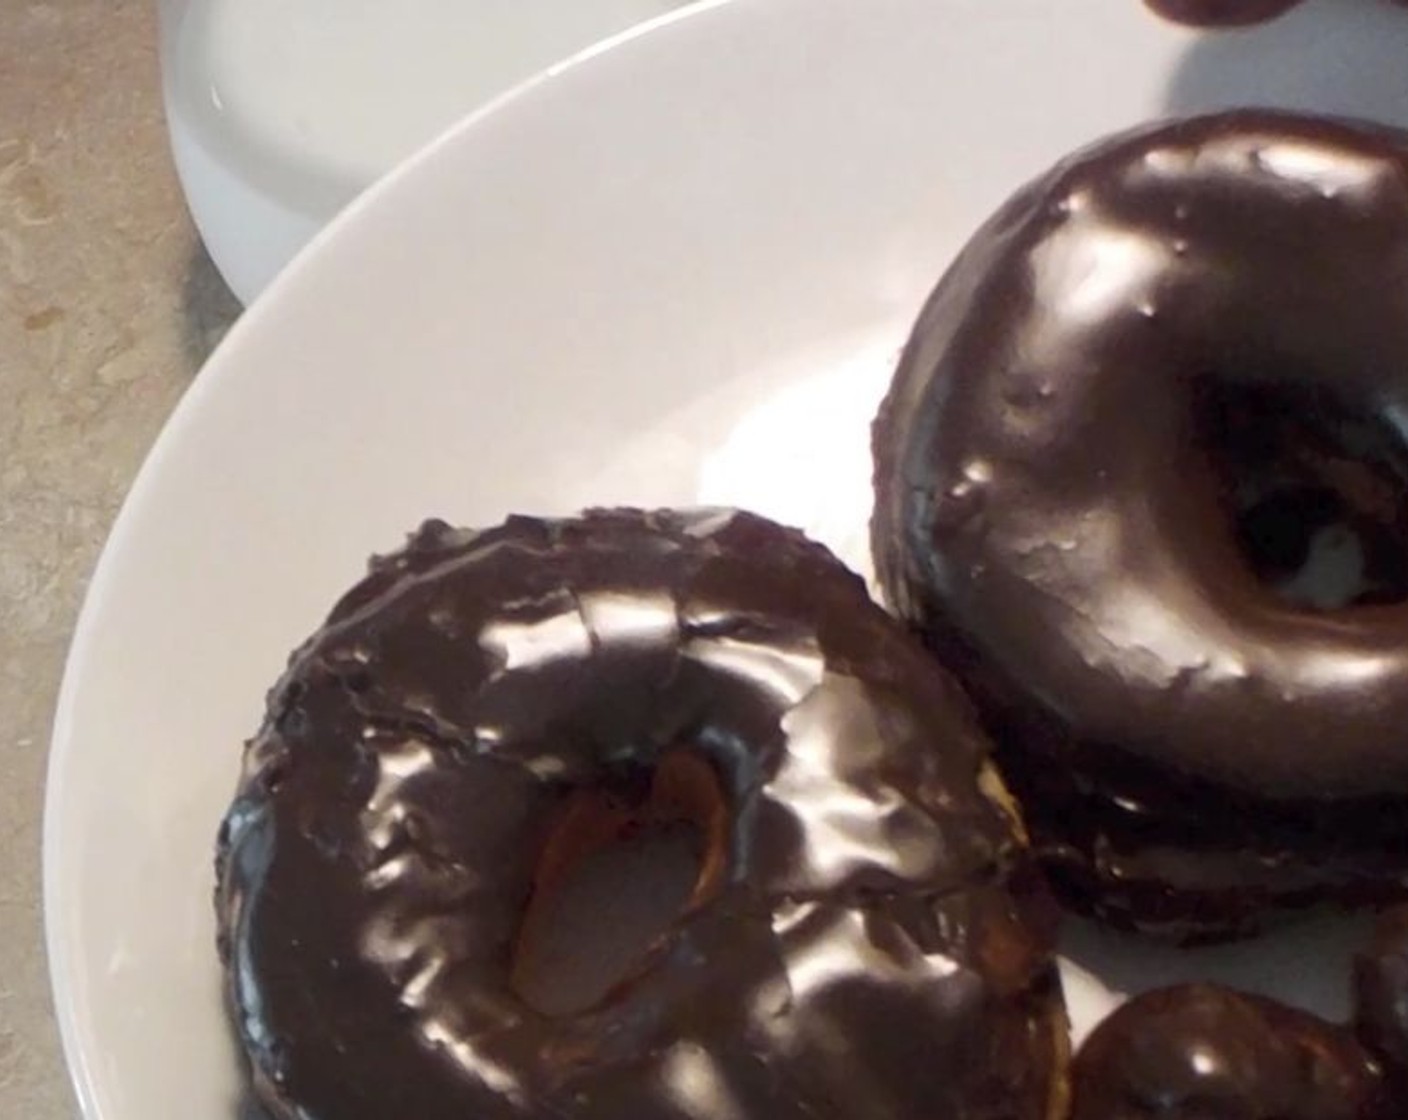 Chocolate Glazed Yeast Donuts